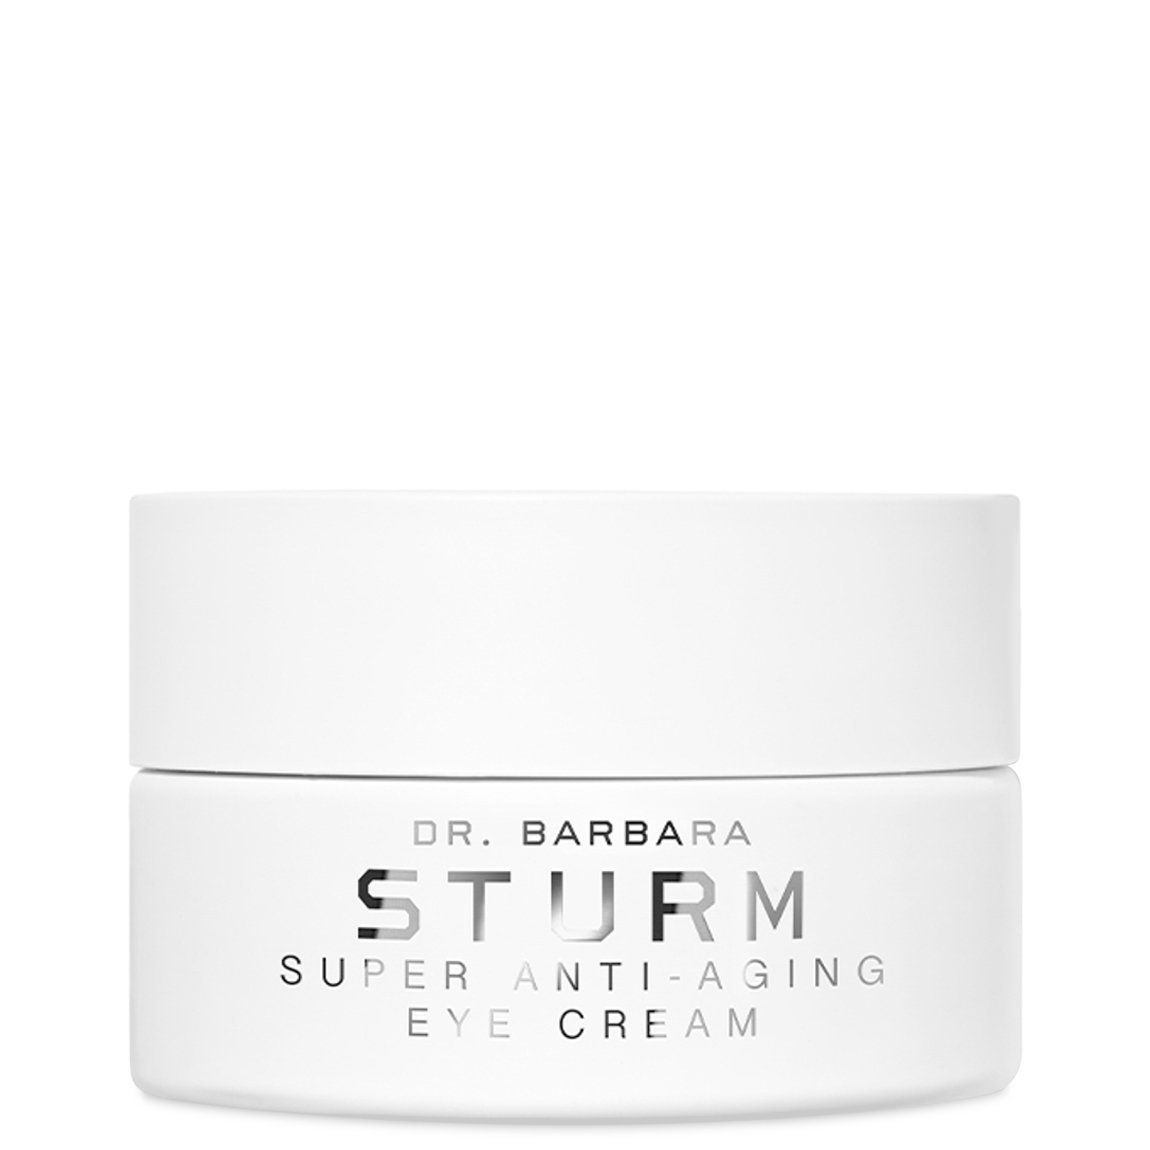 Dr. Barbara Sturm Super Anti-Aging Eye Cream alternative view 1 - product swatch.